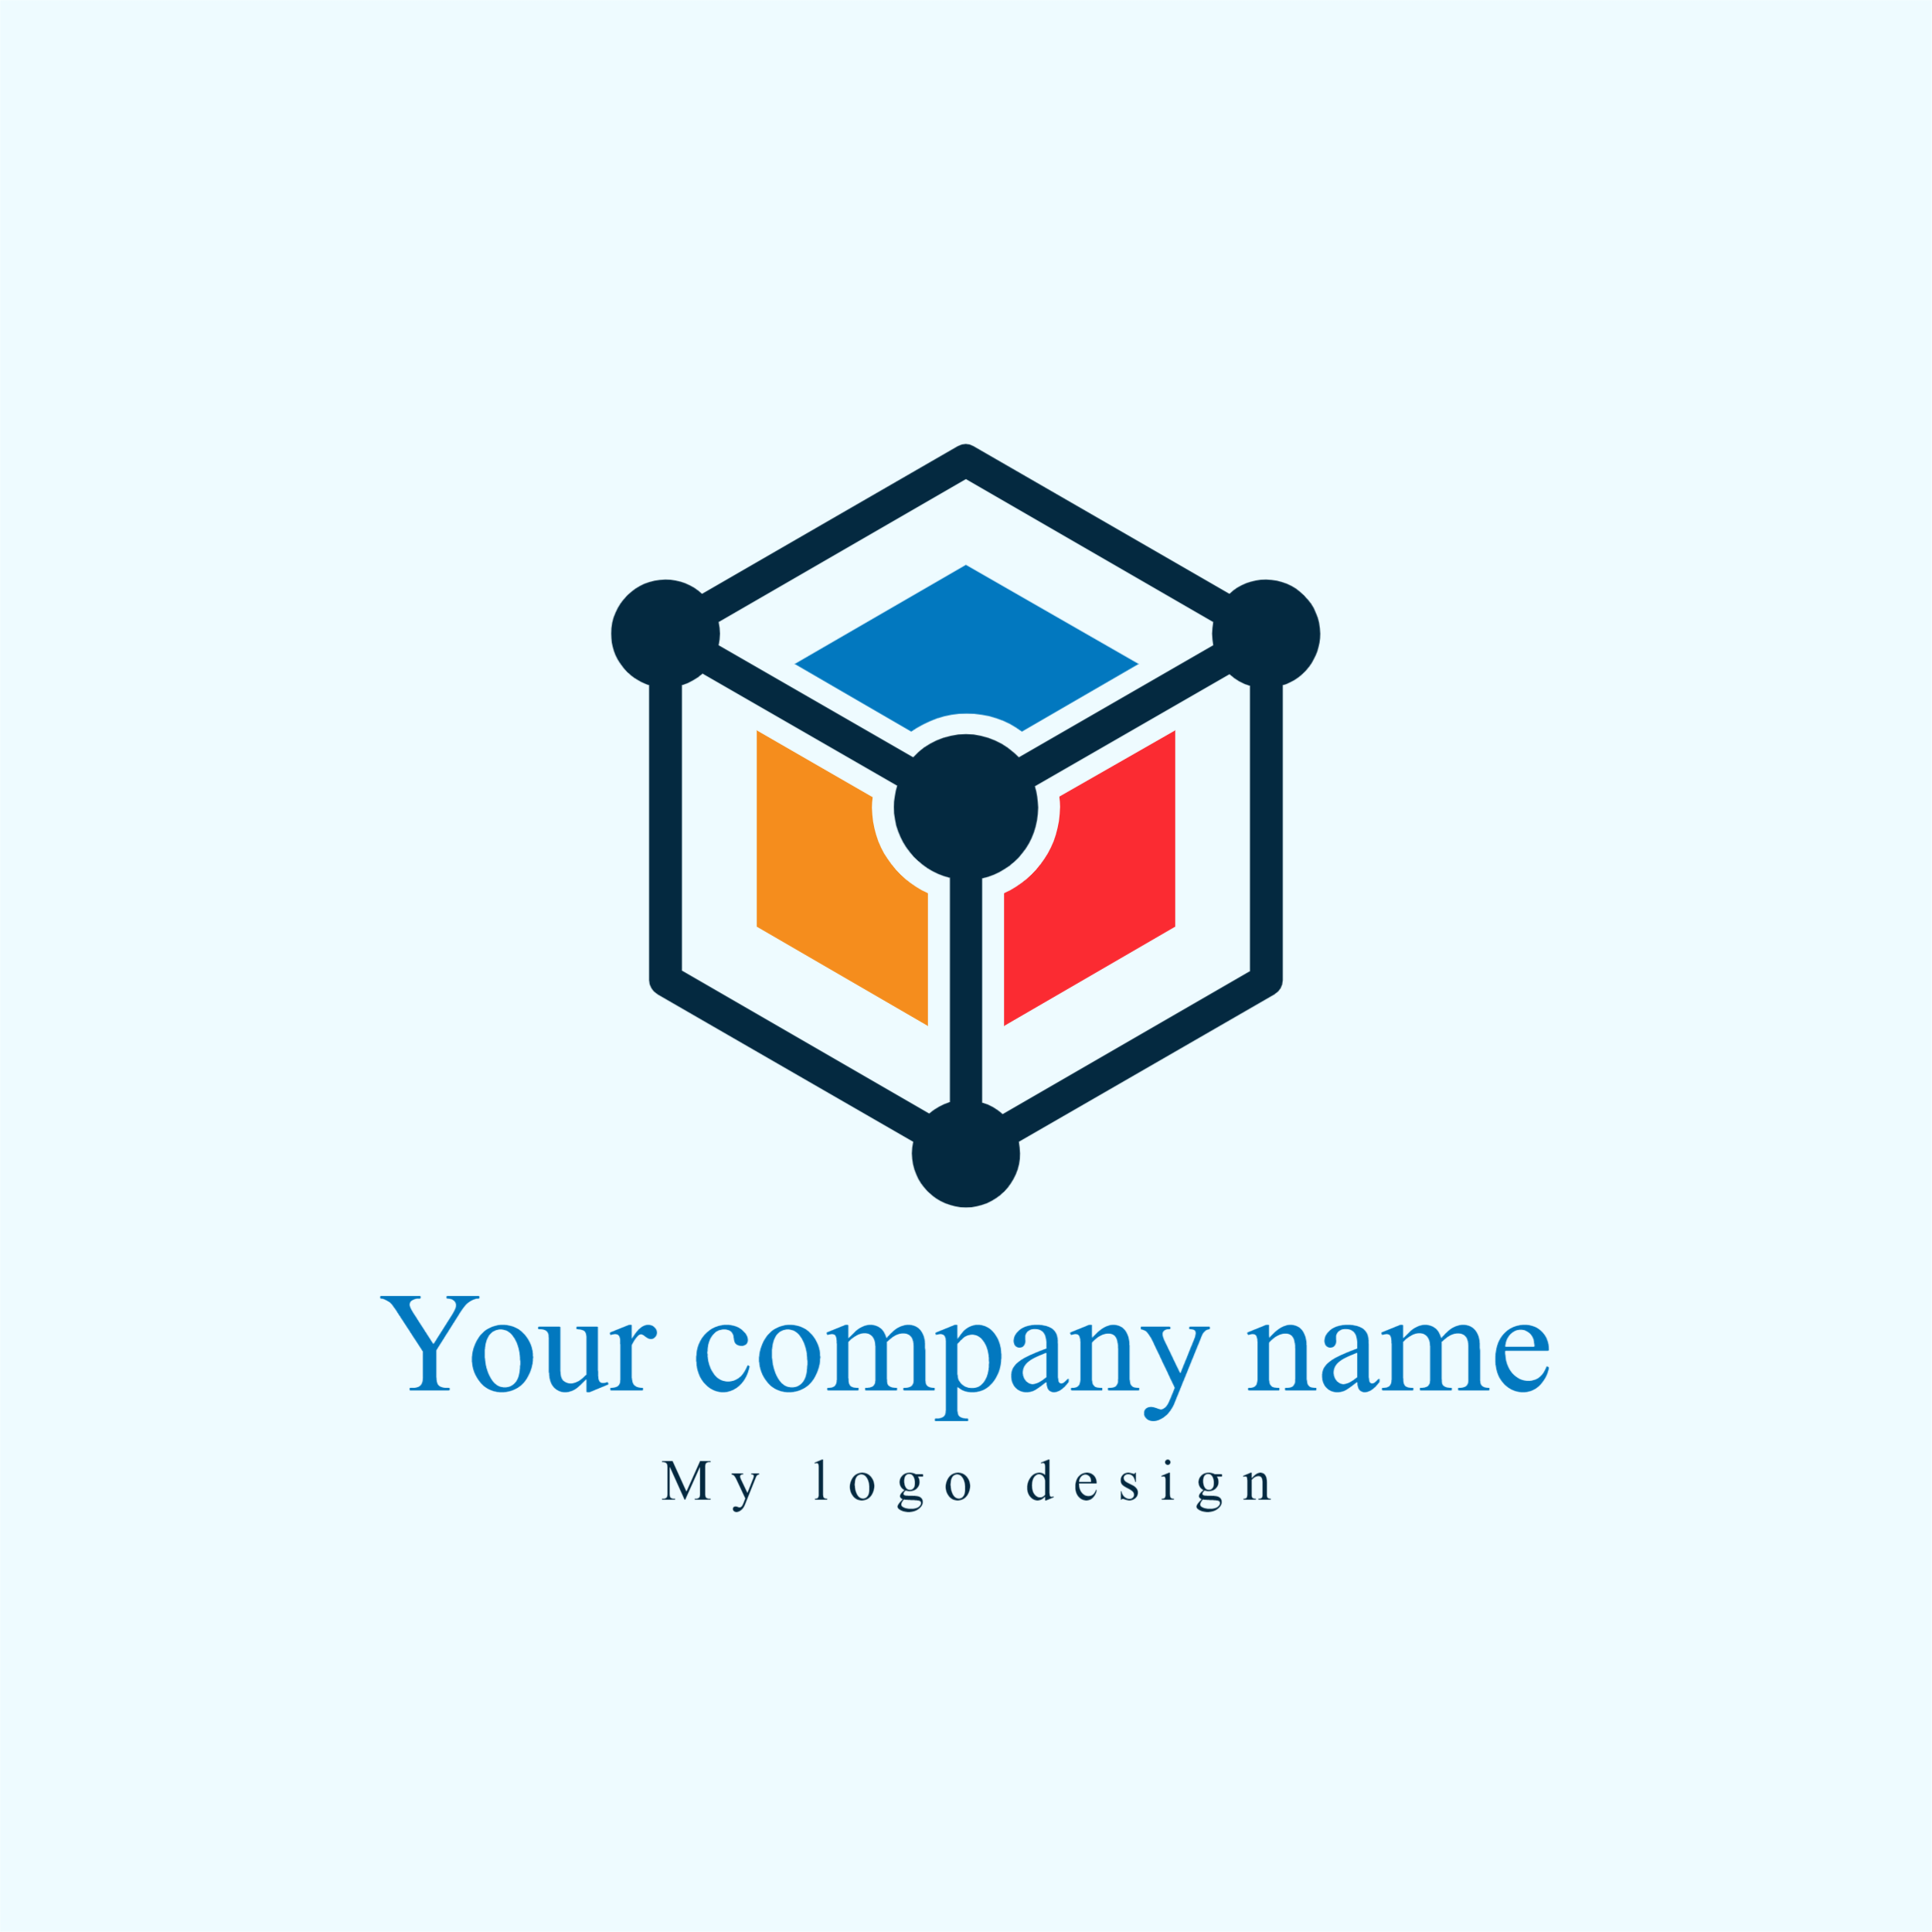 My logo design collection4